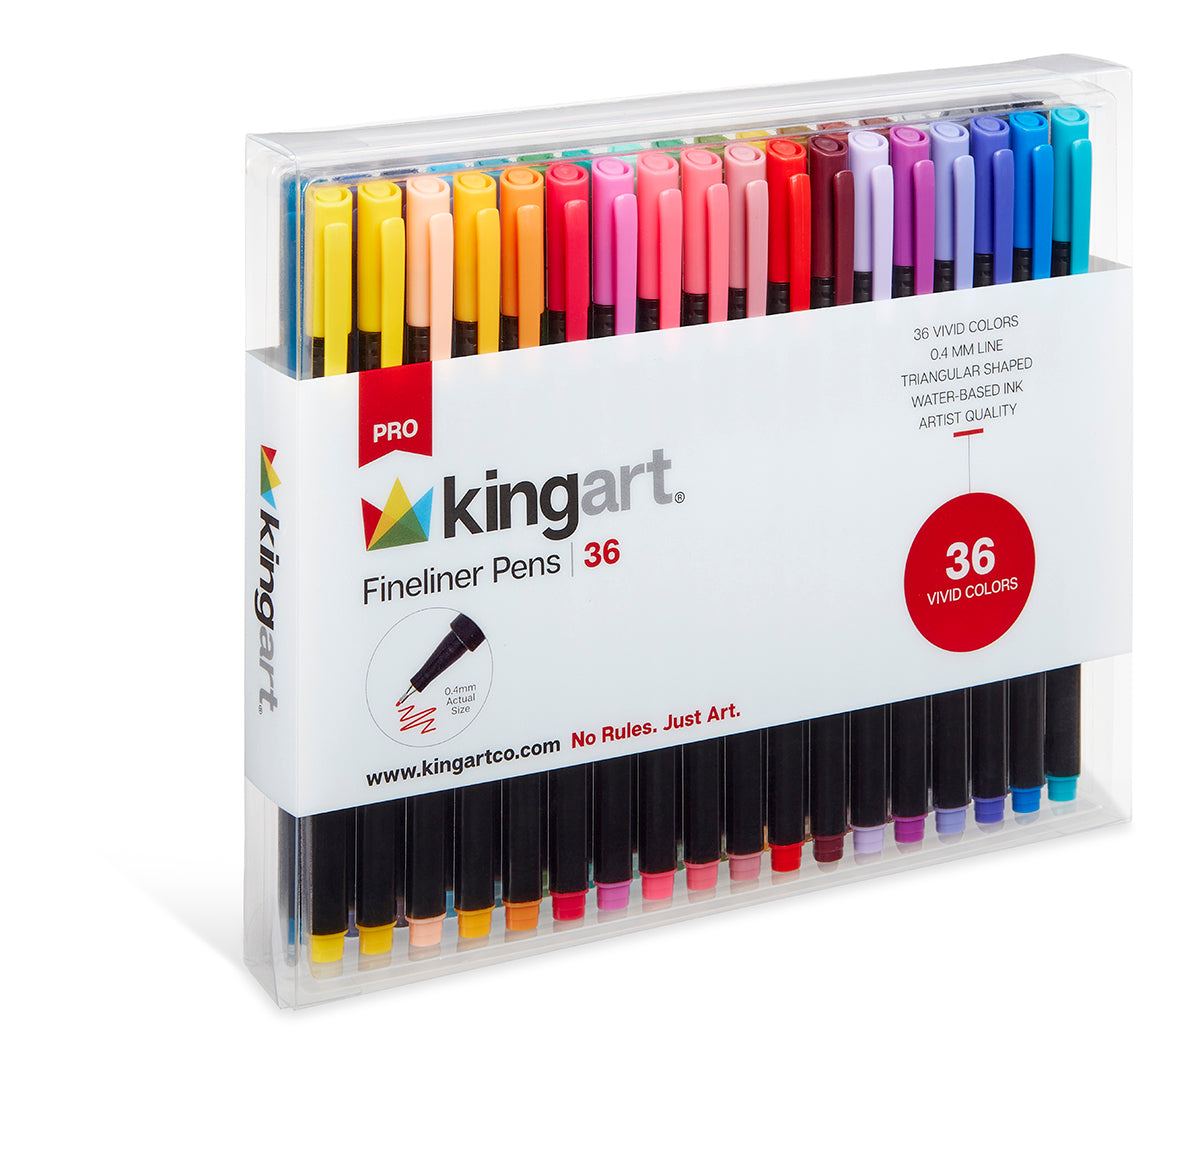 KINGART® PRO Fineliner Pens, 0.4mm Line Width, Triangular